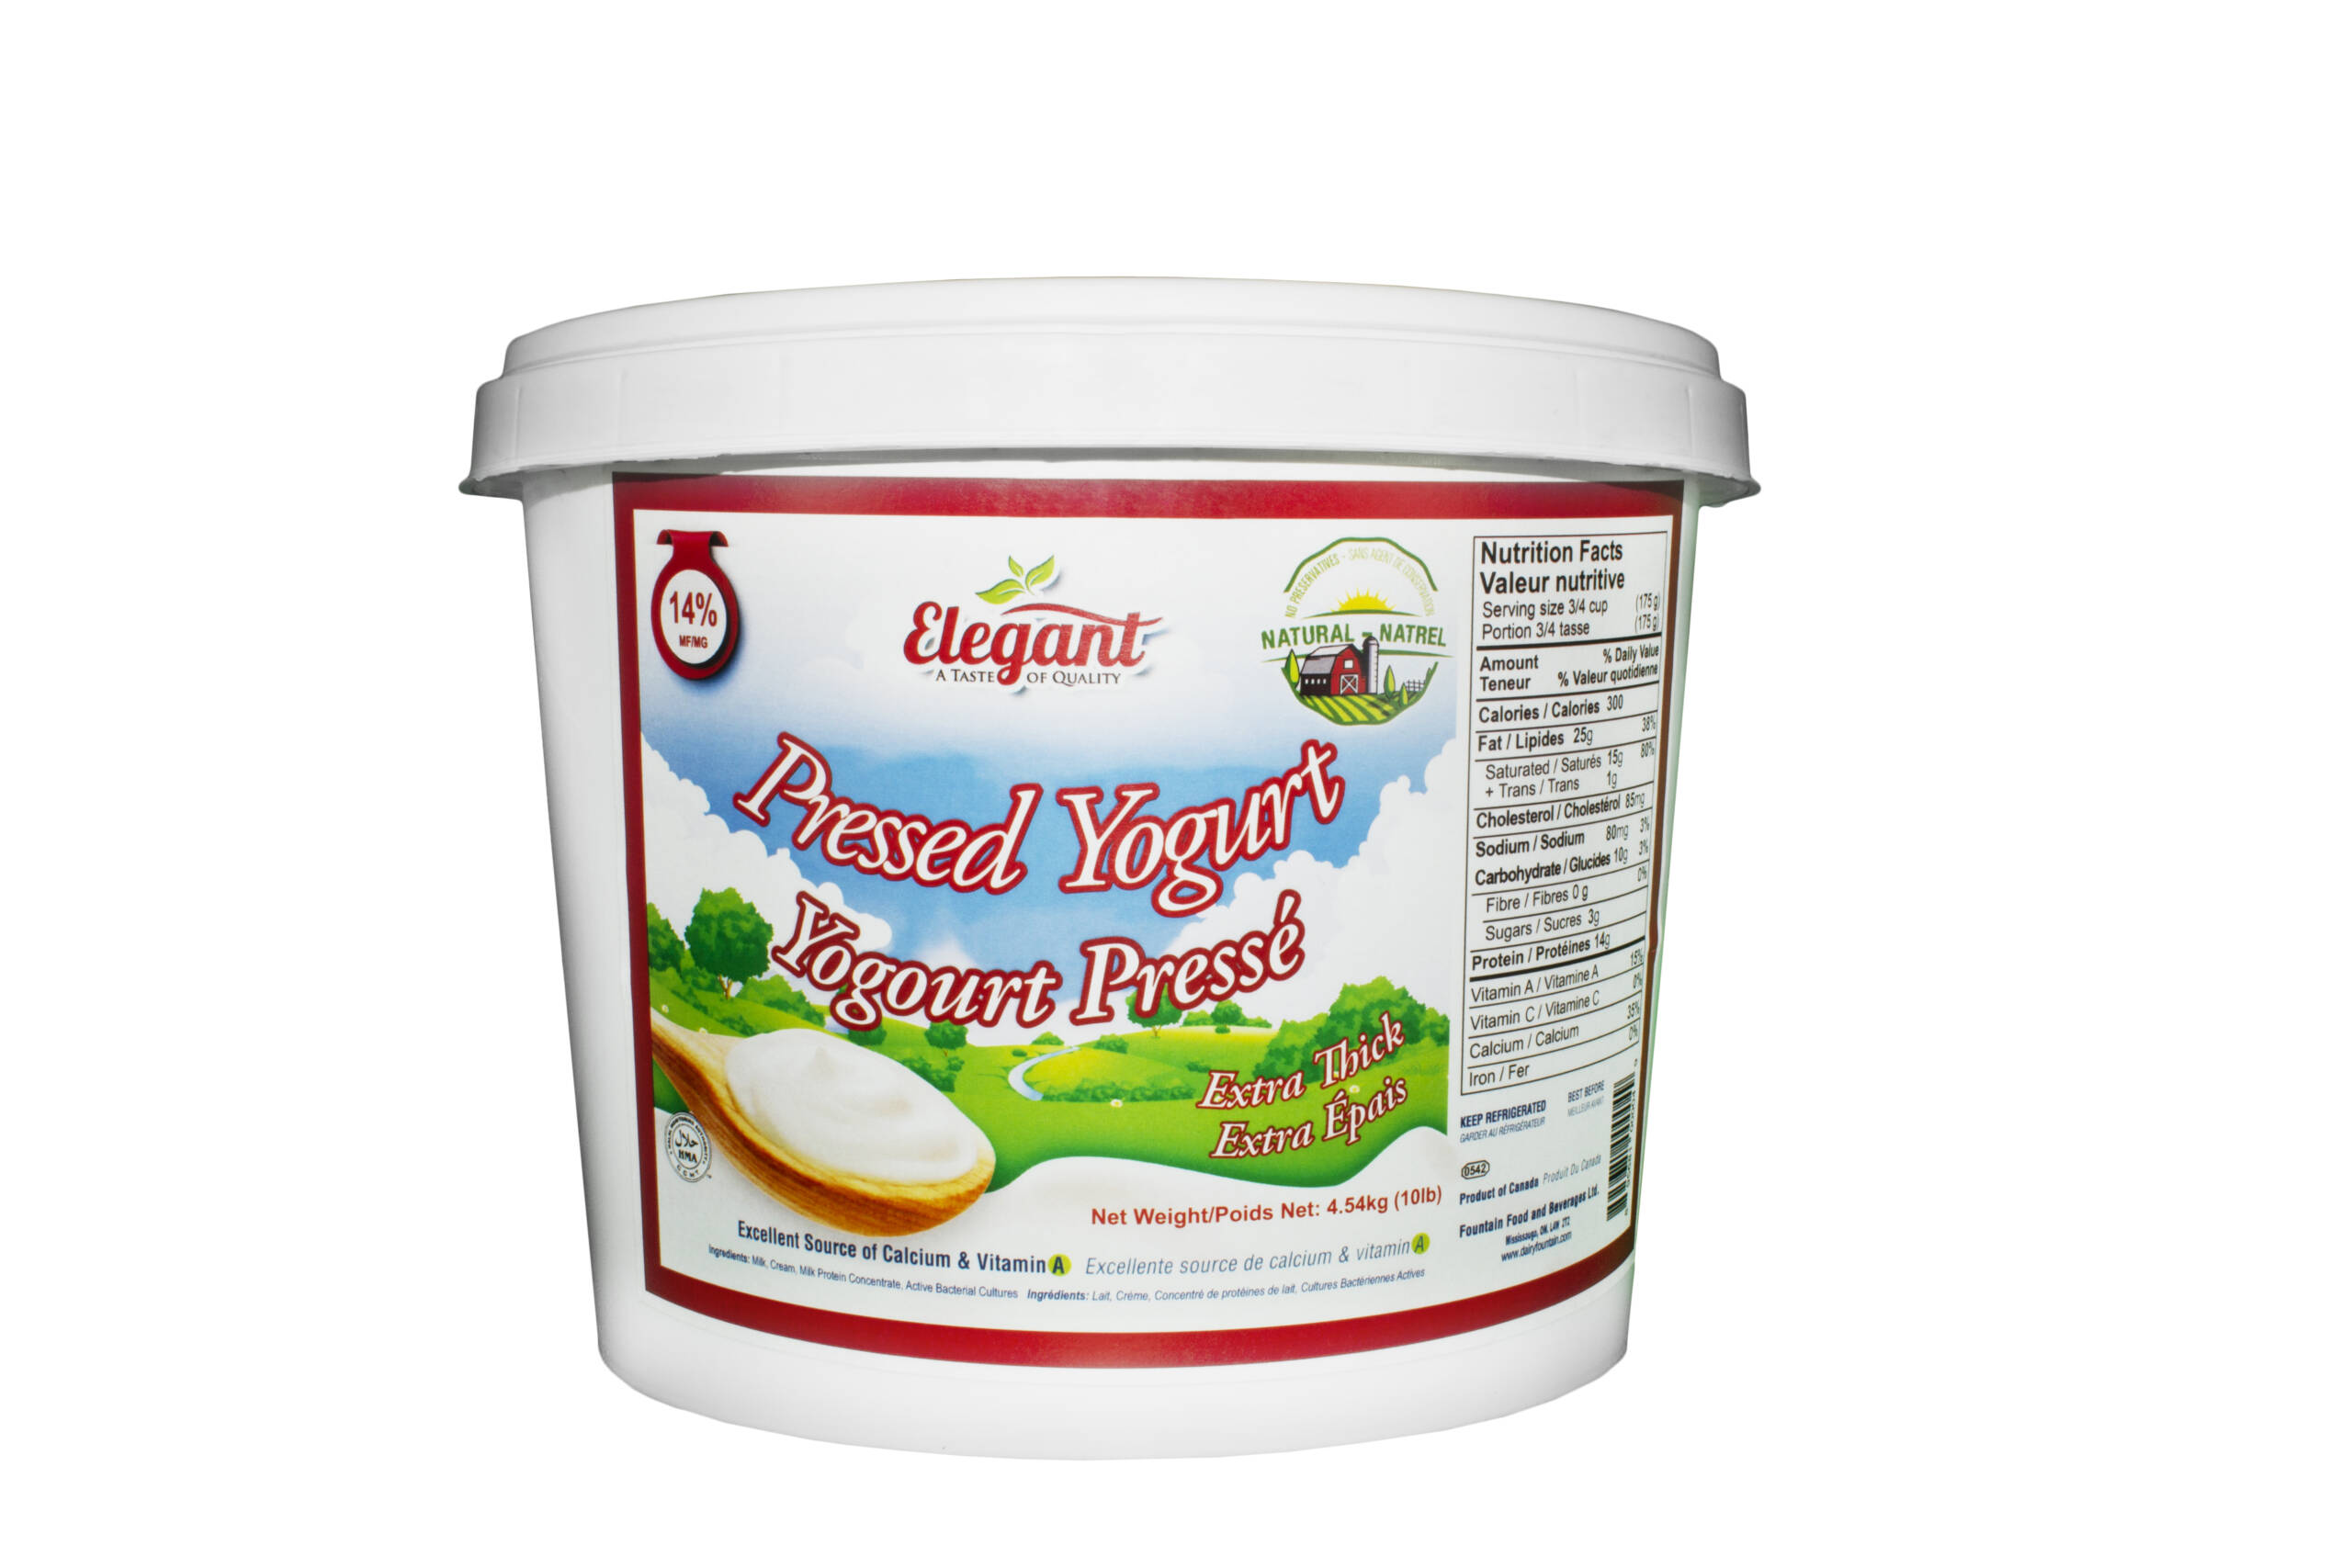 Elegant - Pressed Yogurt (Greek)